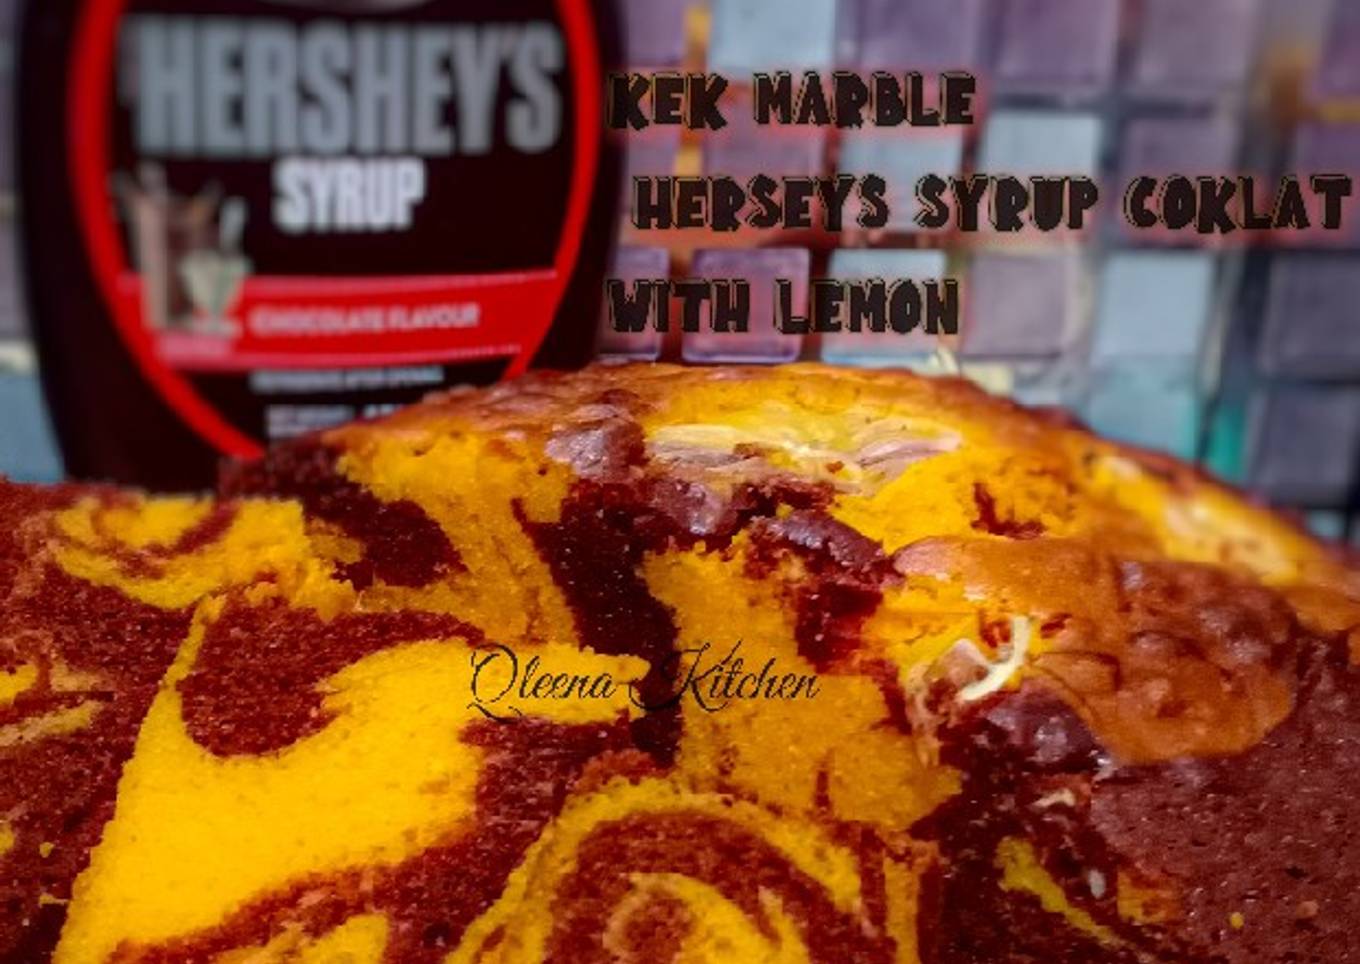 Resepi Kek marble herseys syrup coklat with lemon yang Memang Lazat dan Ringkas